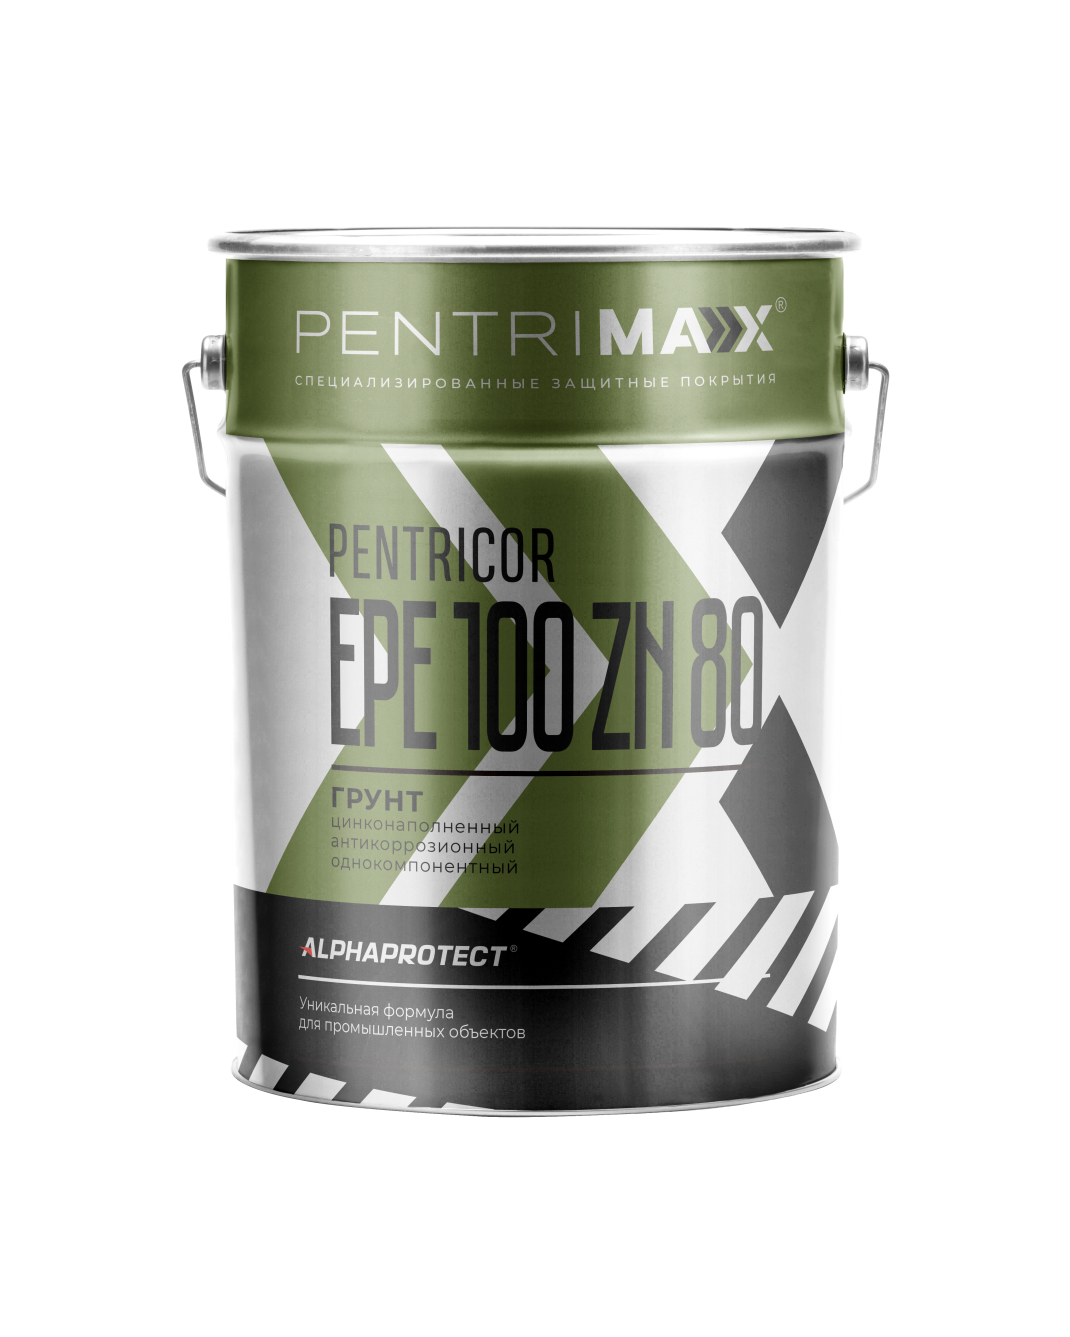 Антикоррозионный грунт по металлу PENTRICOR EPE 100 Zn 80